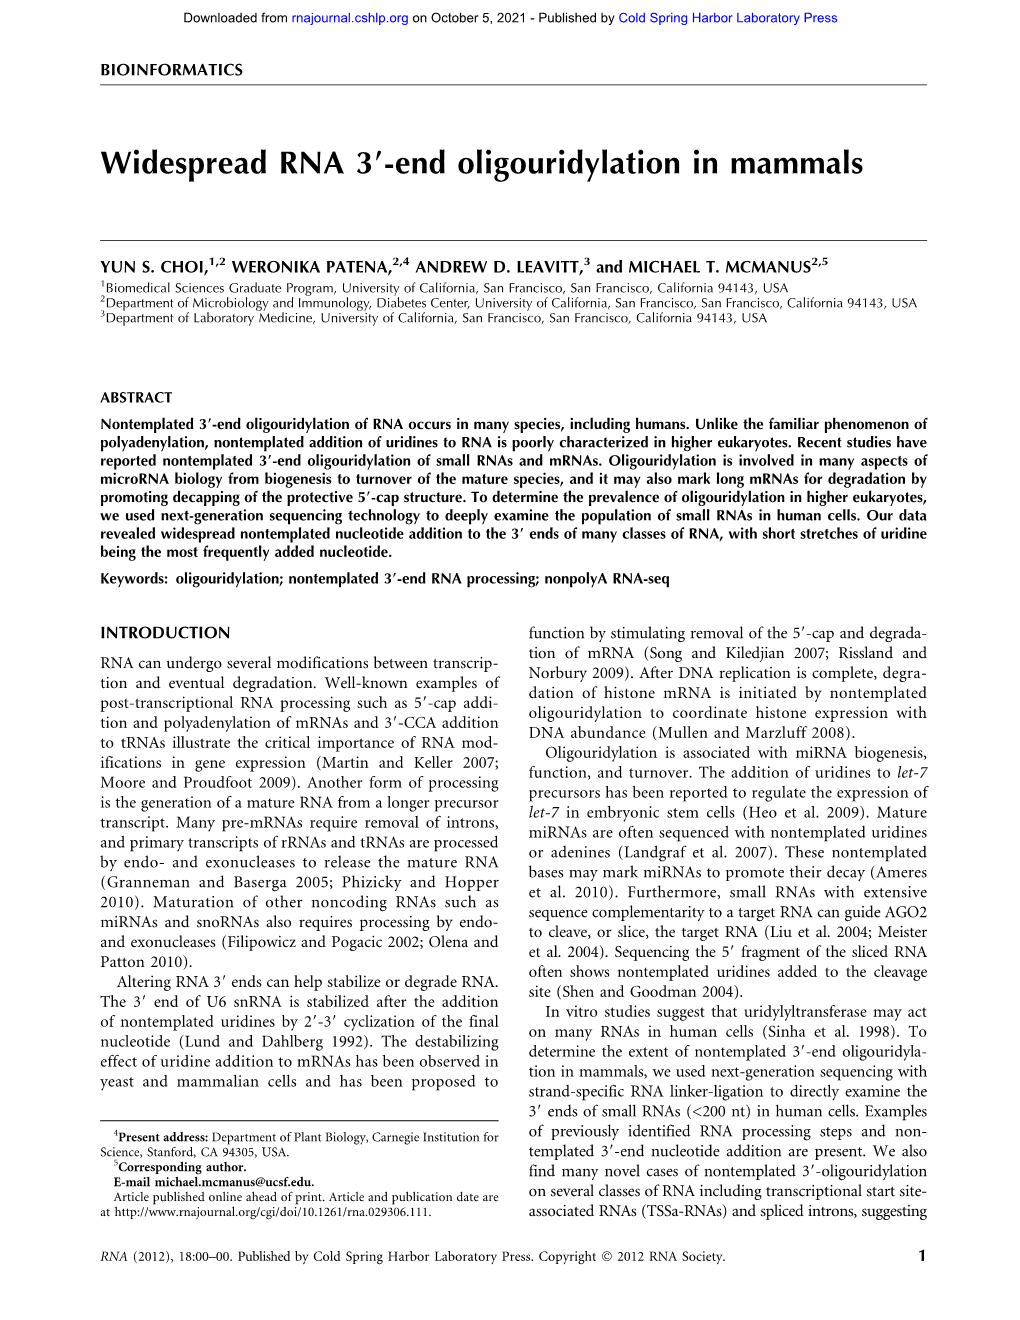 Widespread RNA 39-End Oligouridylation in Mammals